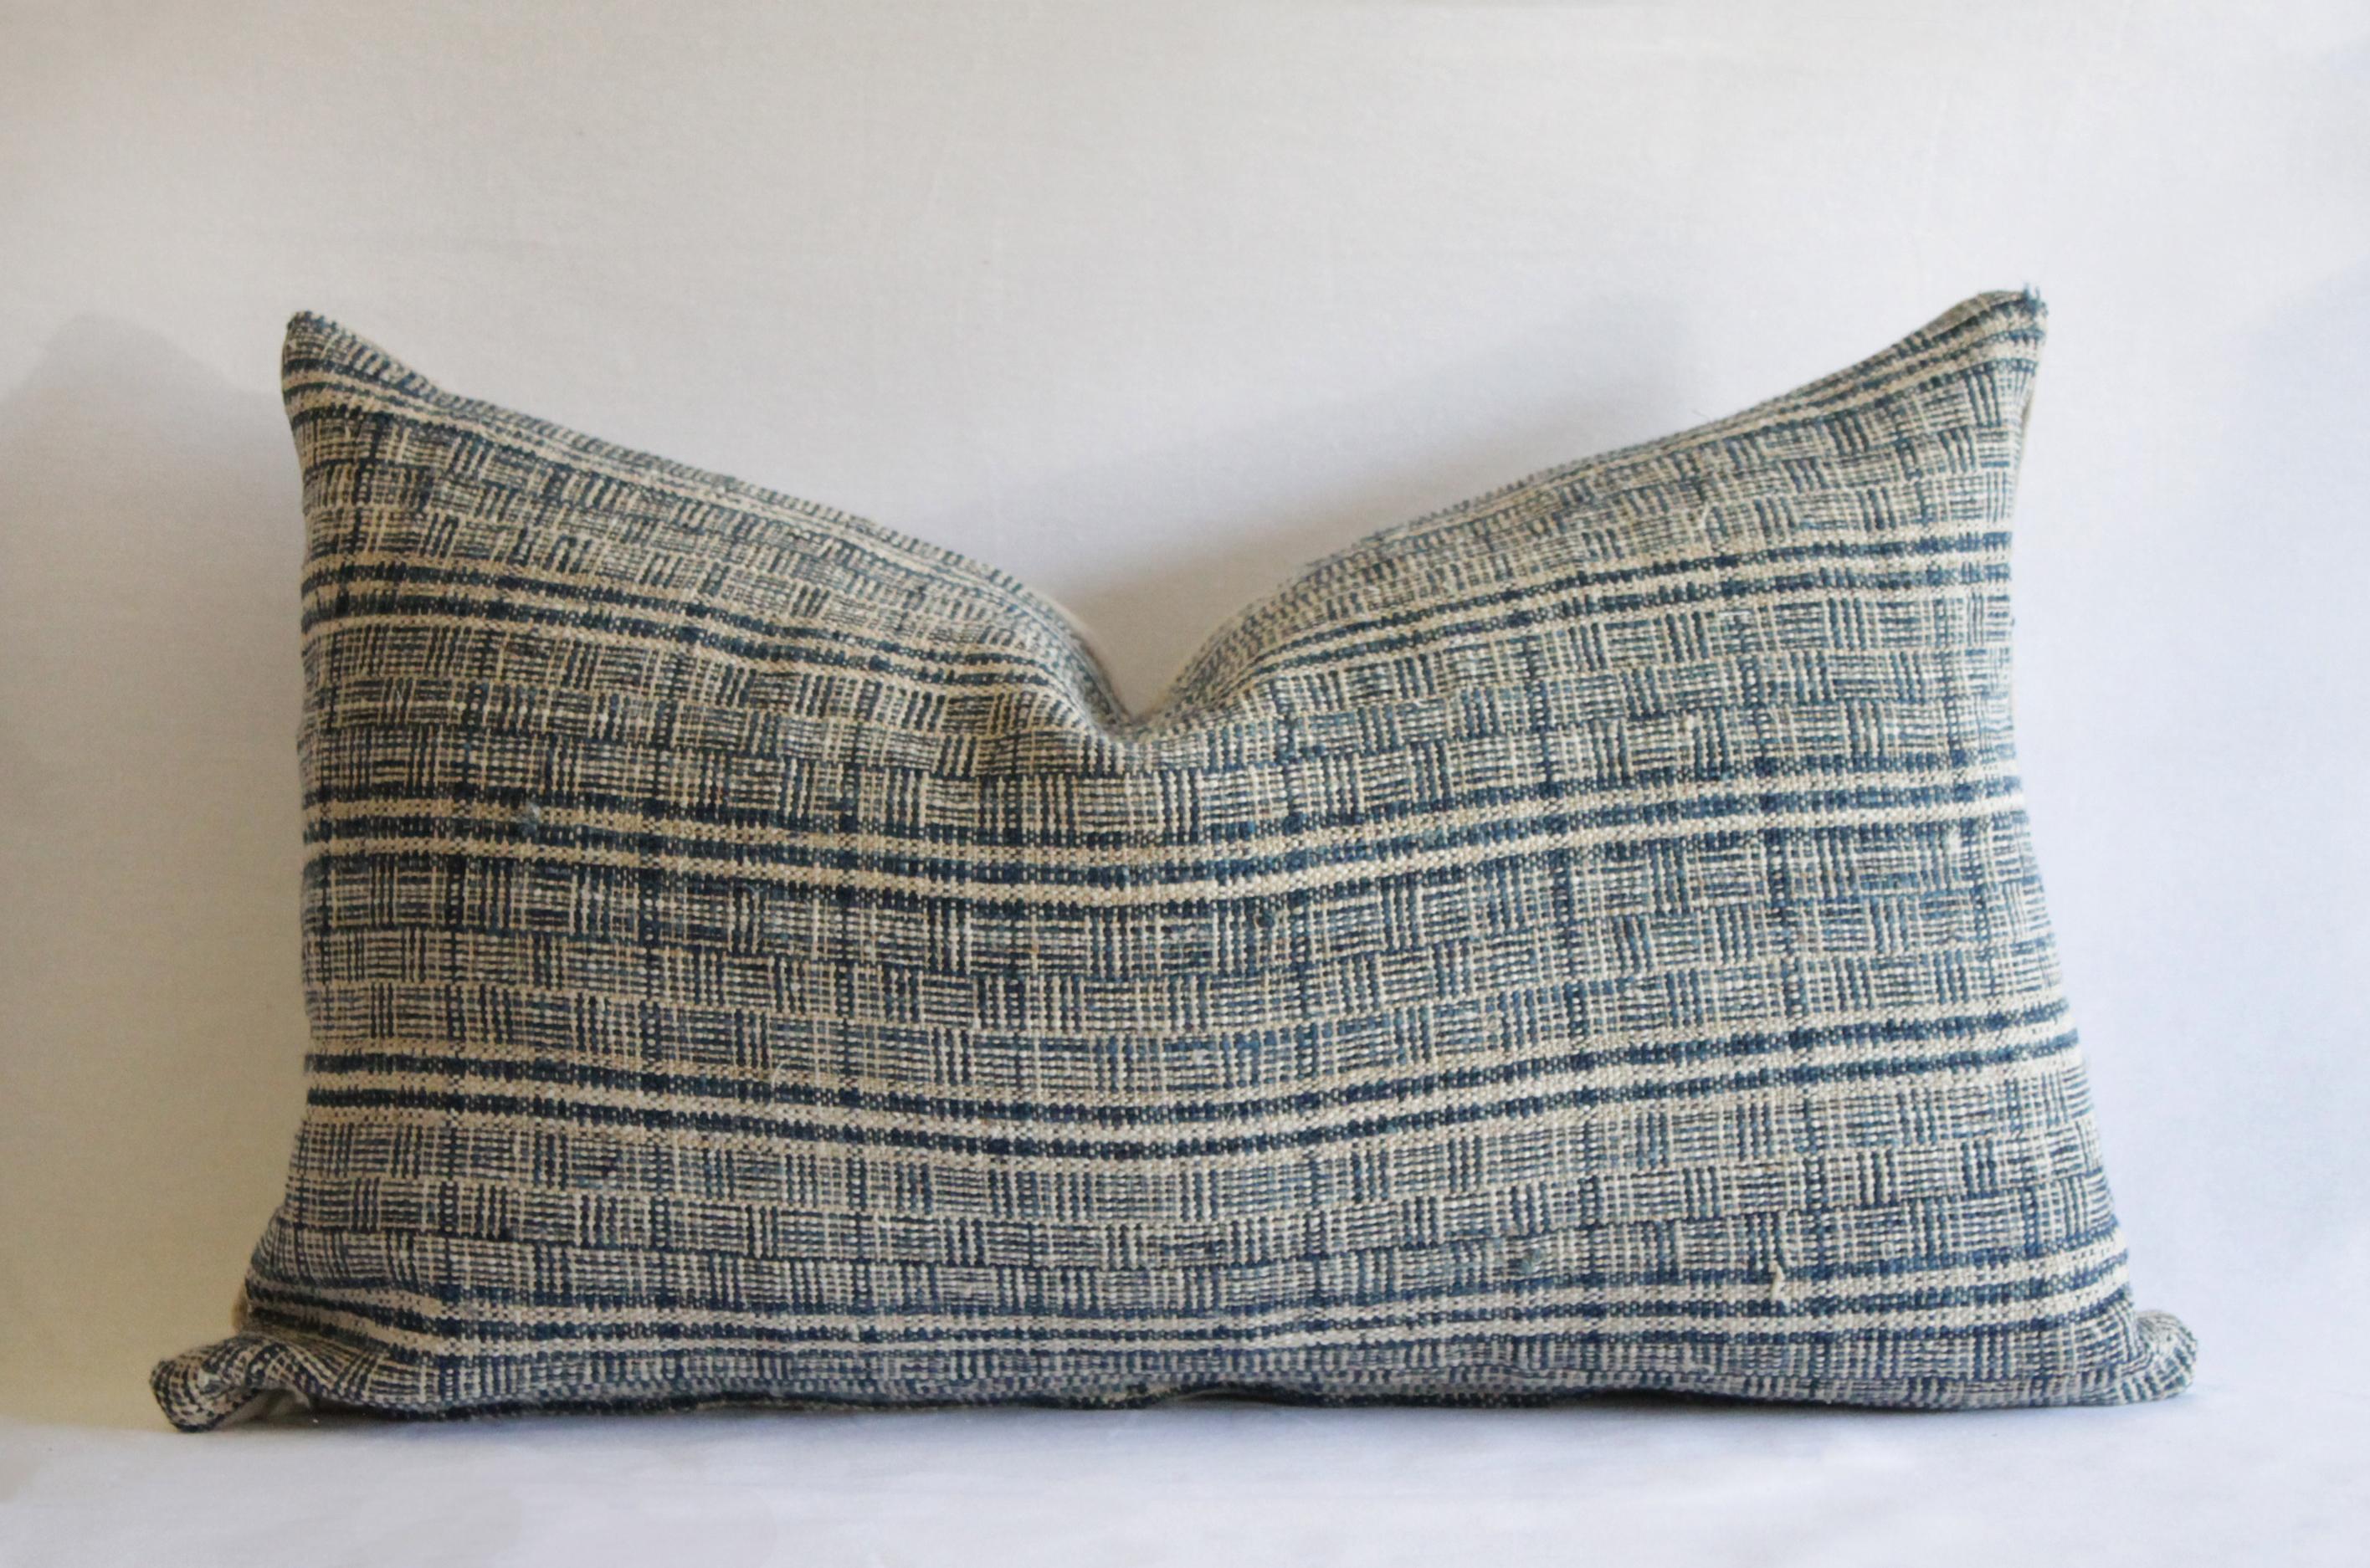 Antique Homespun Linen Lumbar pillows made from a vintage indigo and natural stripe grain sack linen, with a solid natural flax linen backing. Hidden zipper closure.
Measures: 15